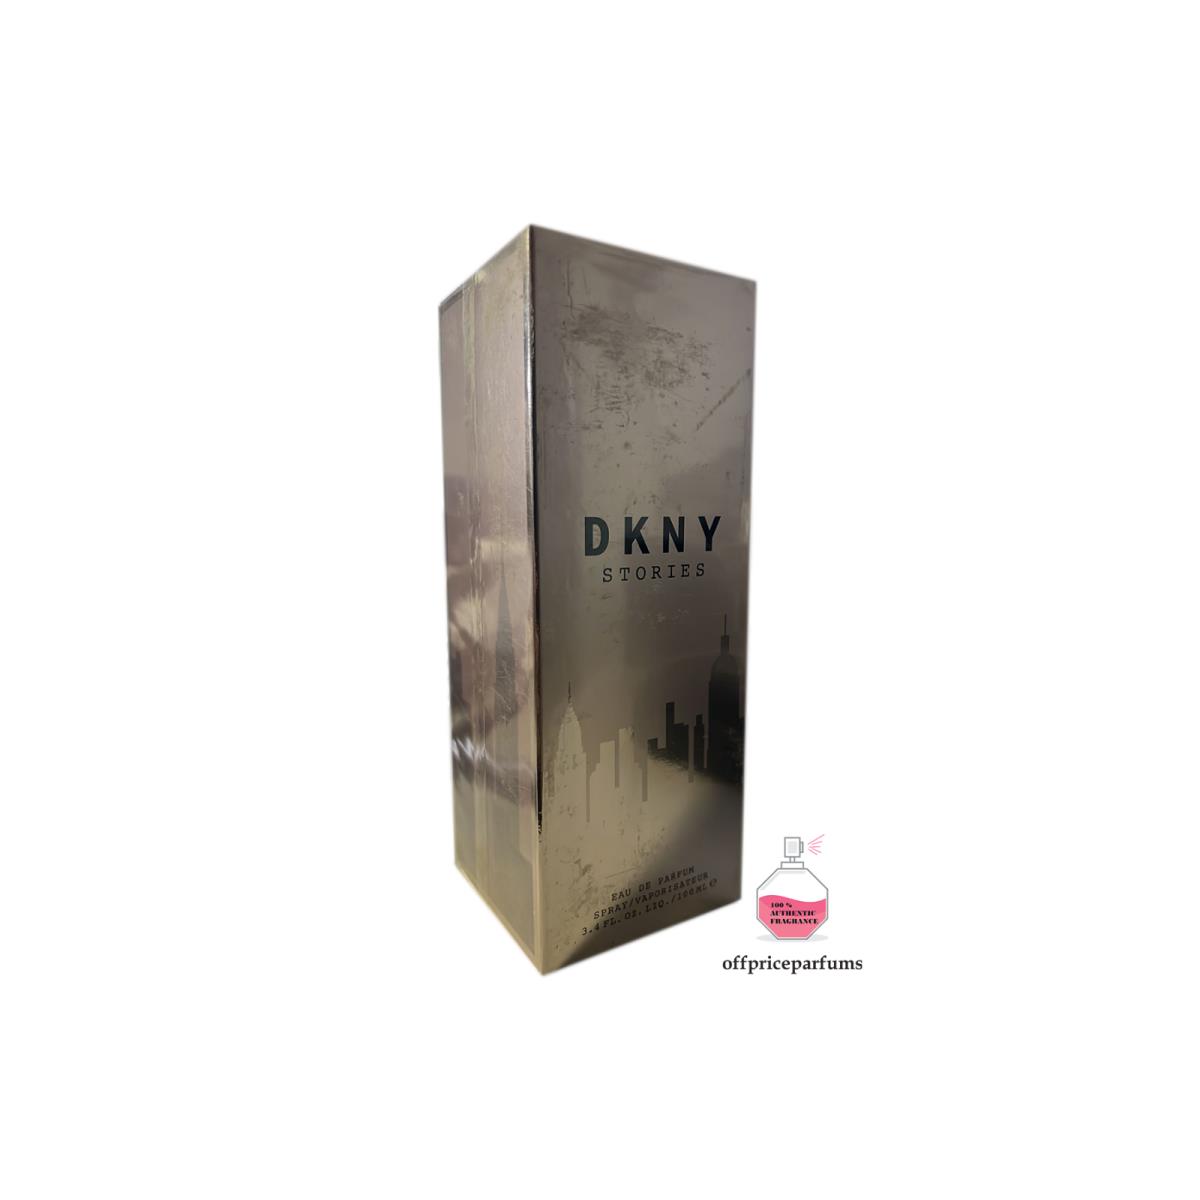 Dkny Stories Perfume 3.4 oz Edp Spray For Women by Donna Karan Box